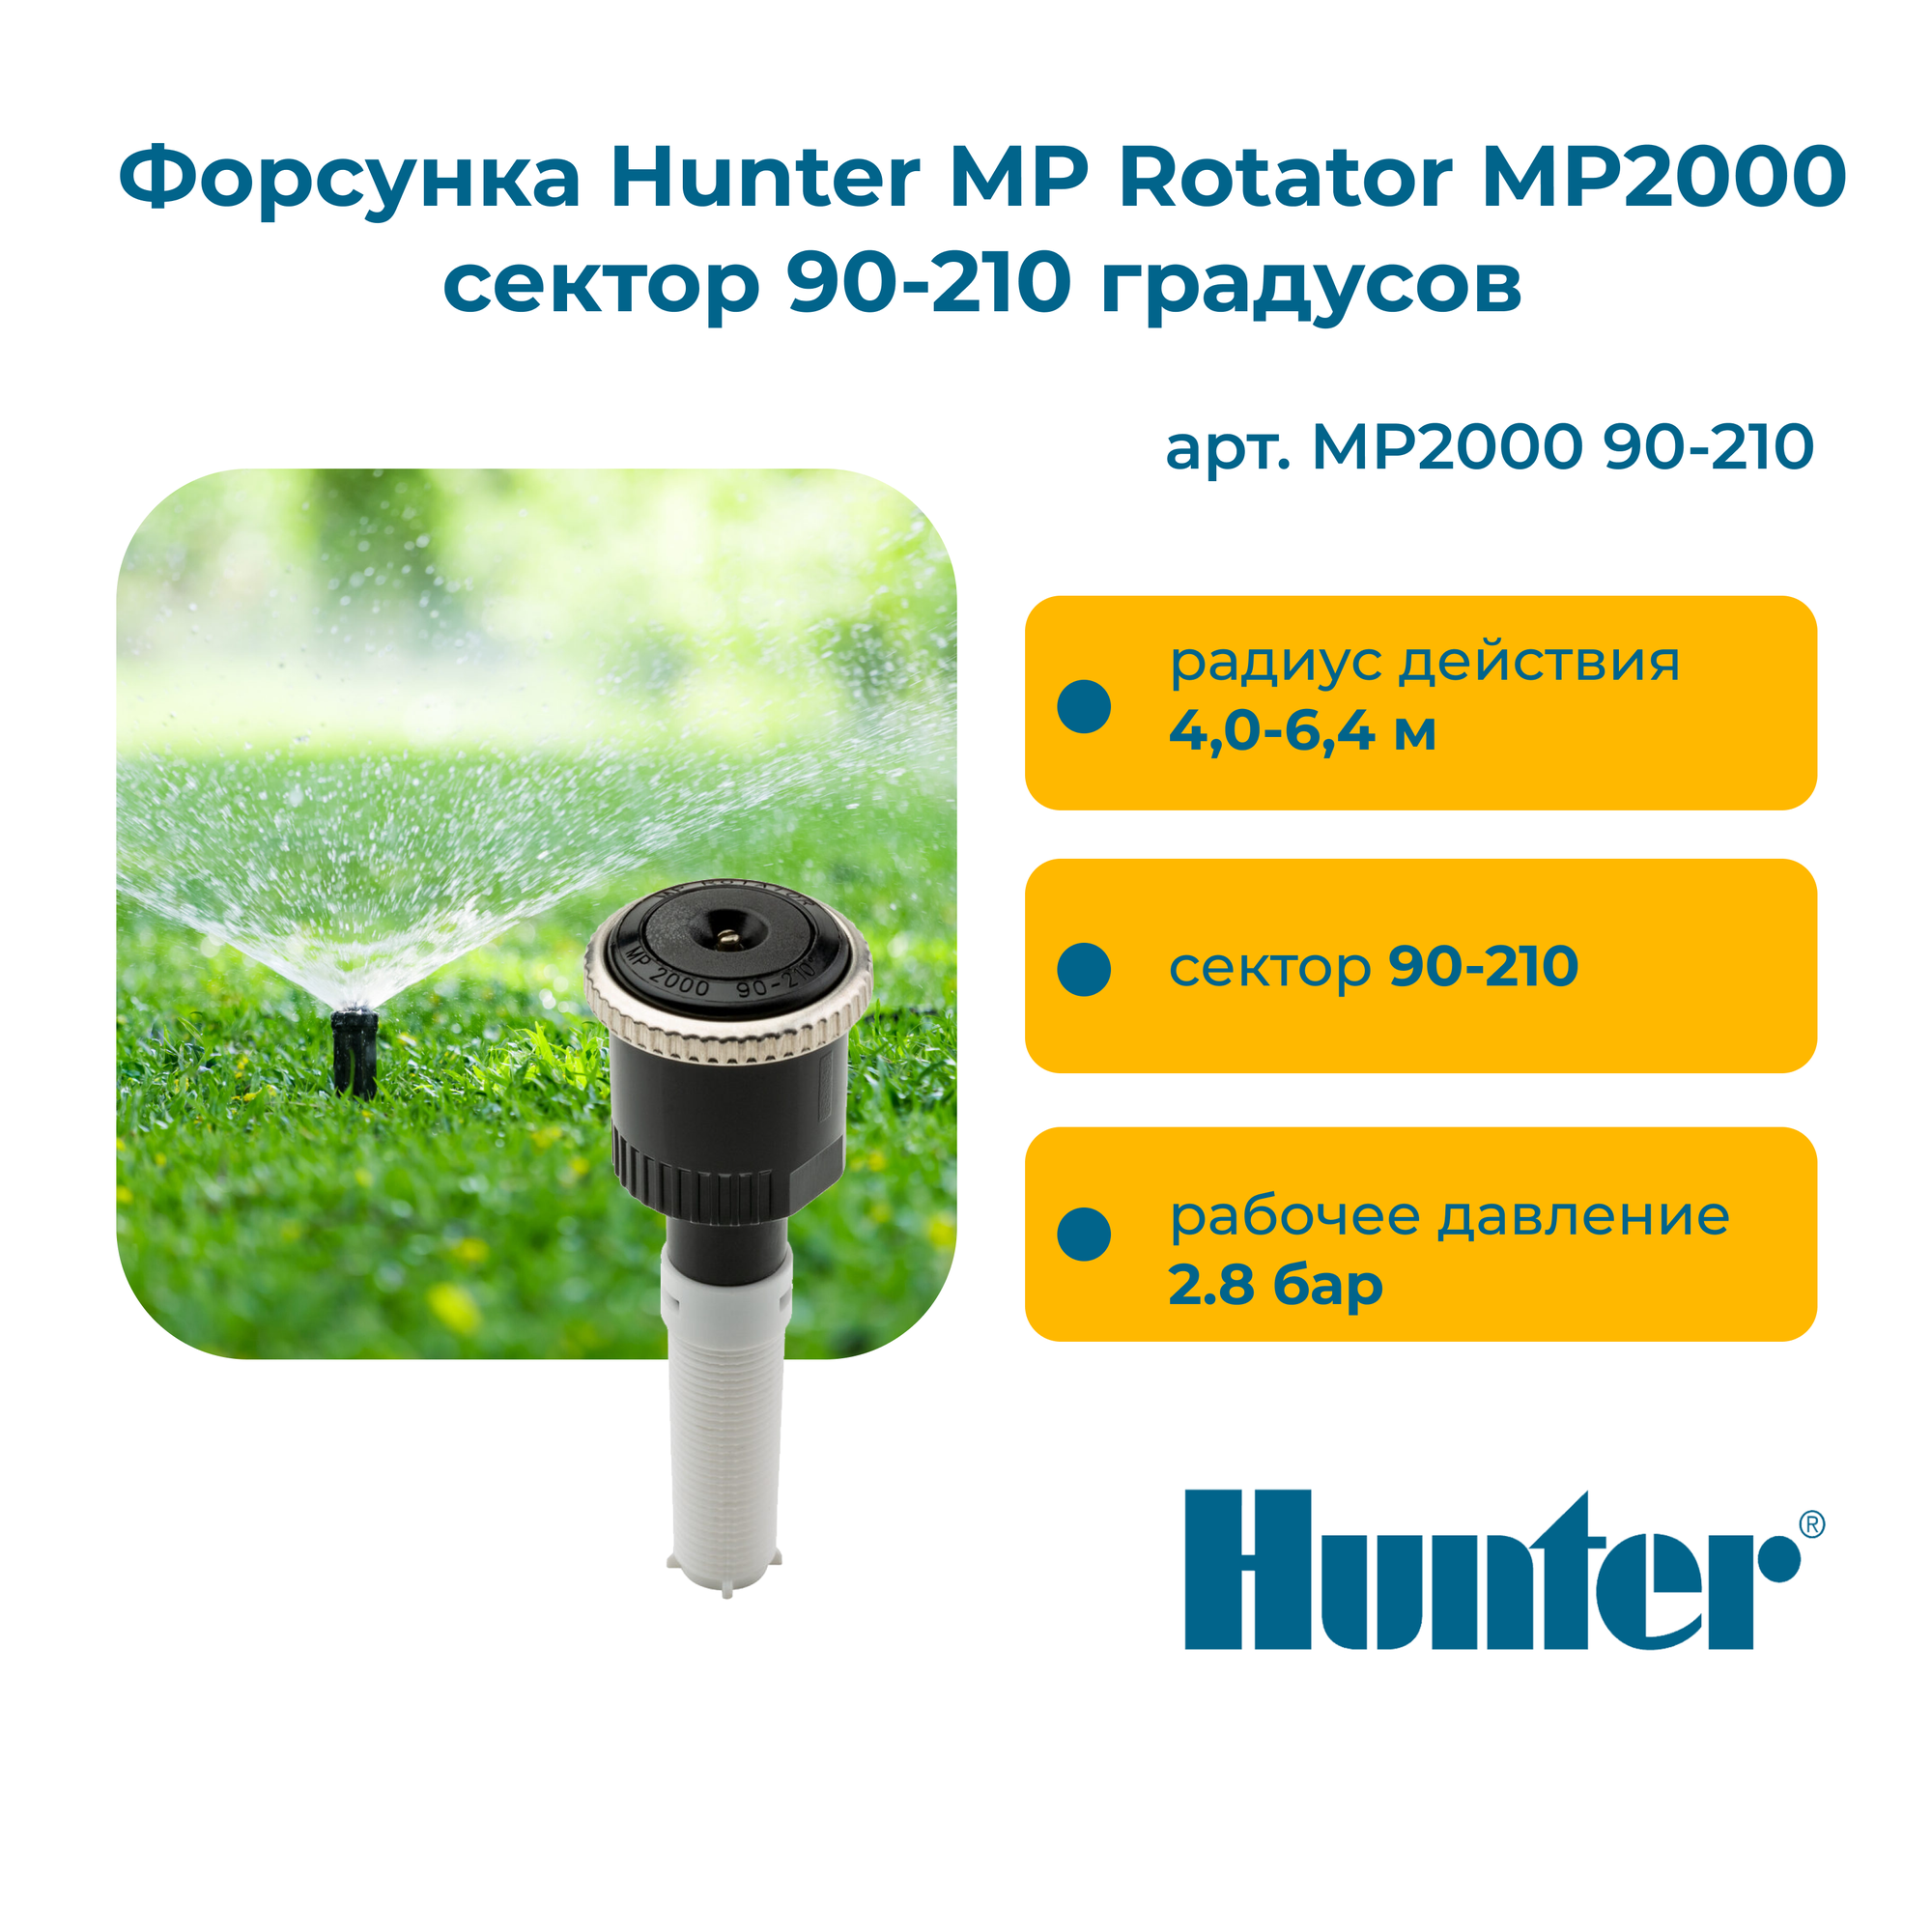 Форсунка Hunter MP Rotator MP2000 сектор 90-210 градусов, радиус 4,0 - 6,4 м